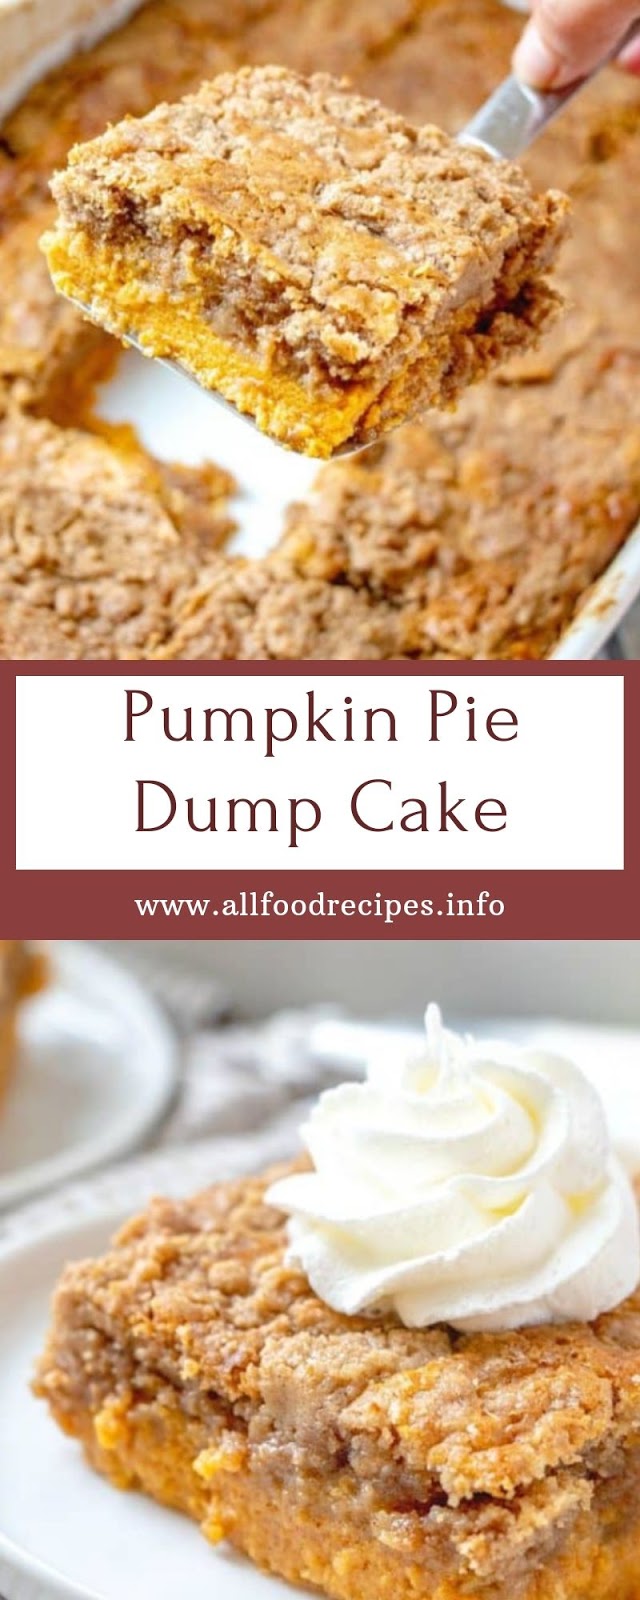 Pumpkin Pie Dump Cake - All food recipes